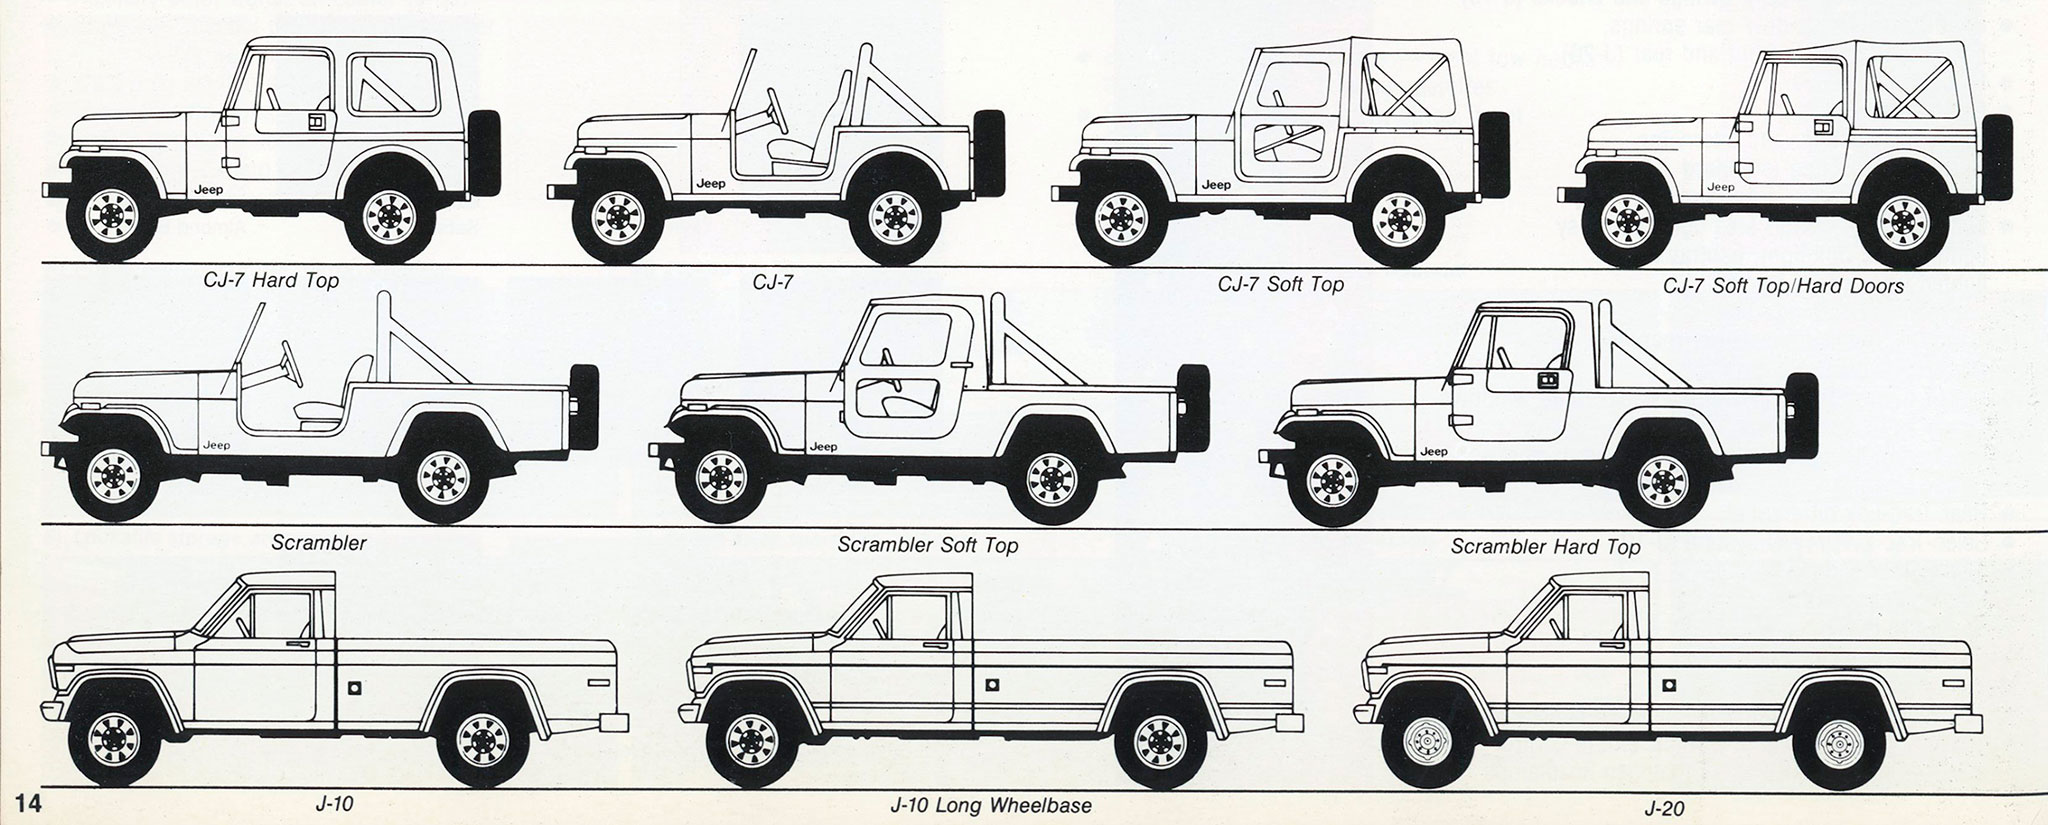 1981 Jeep Scrambler CJ-8 les divers modèles CJ et J-series.